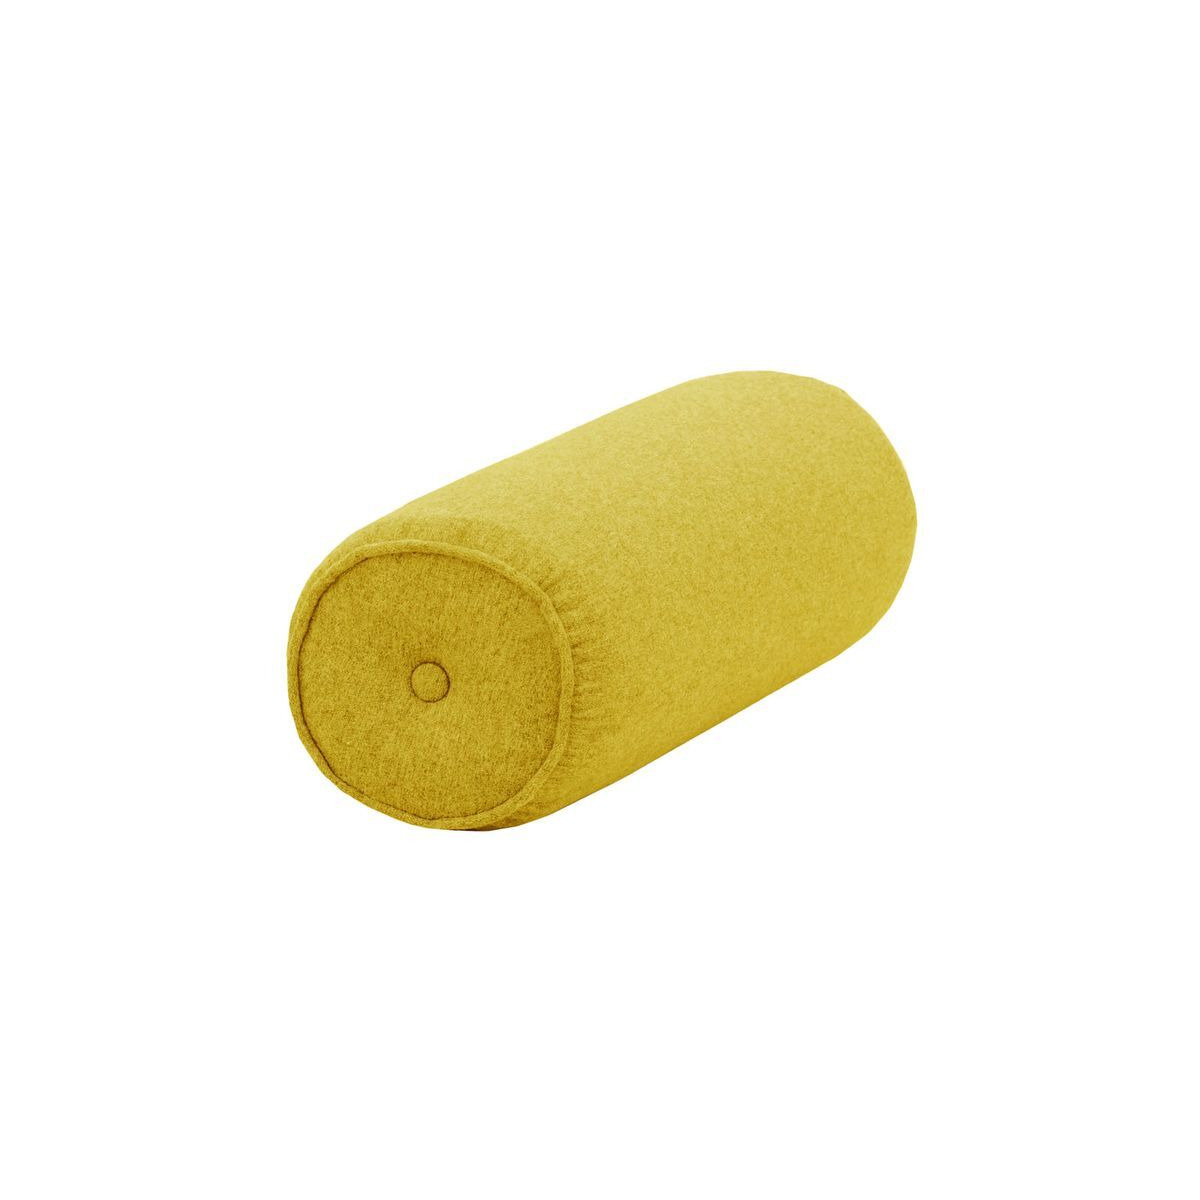 Bolster cushion, yellow - image 1